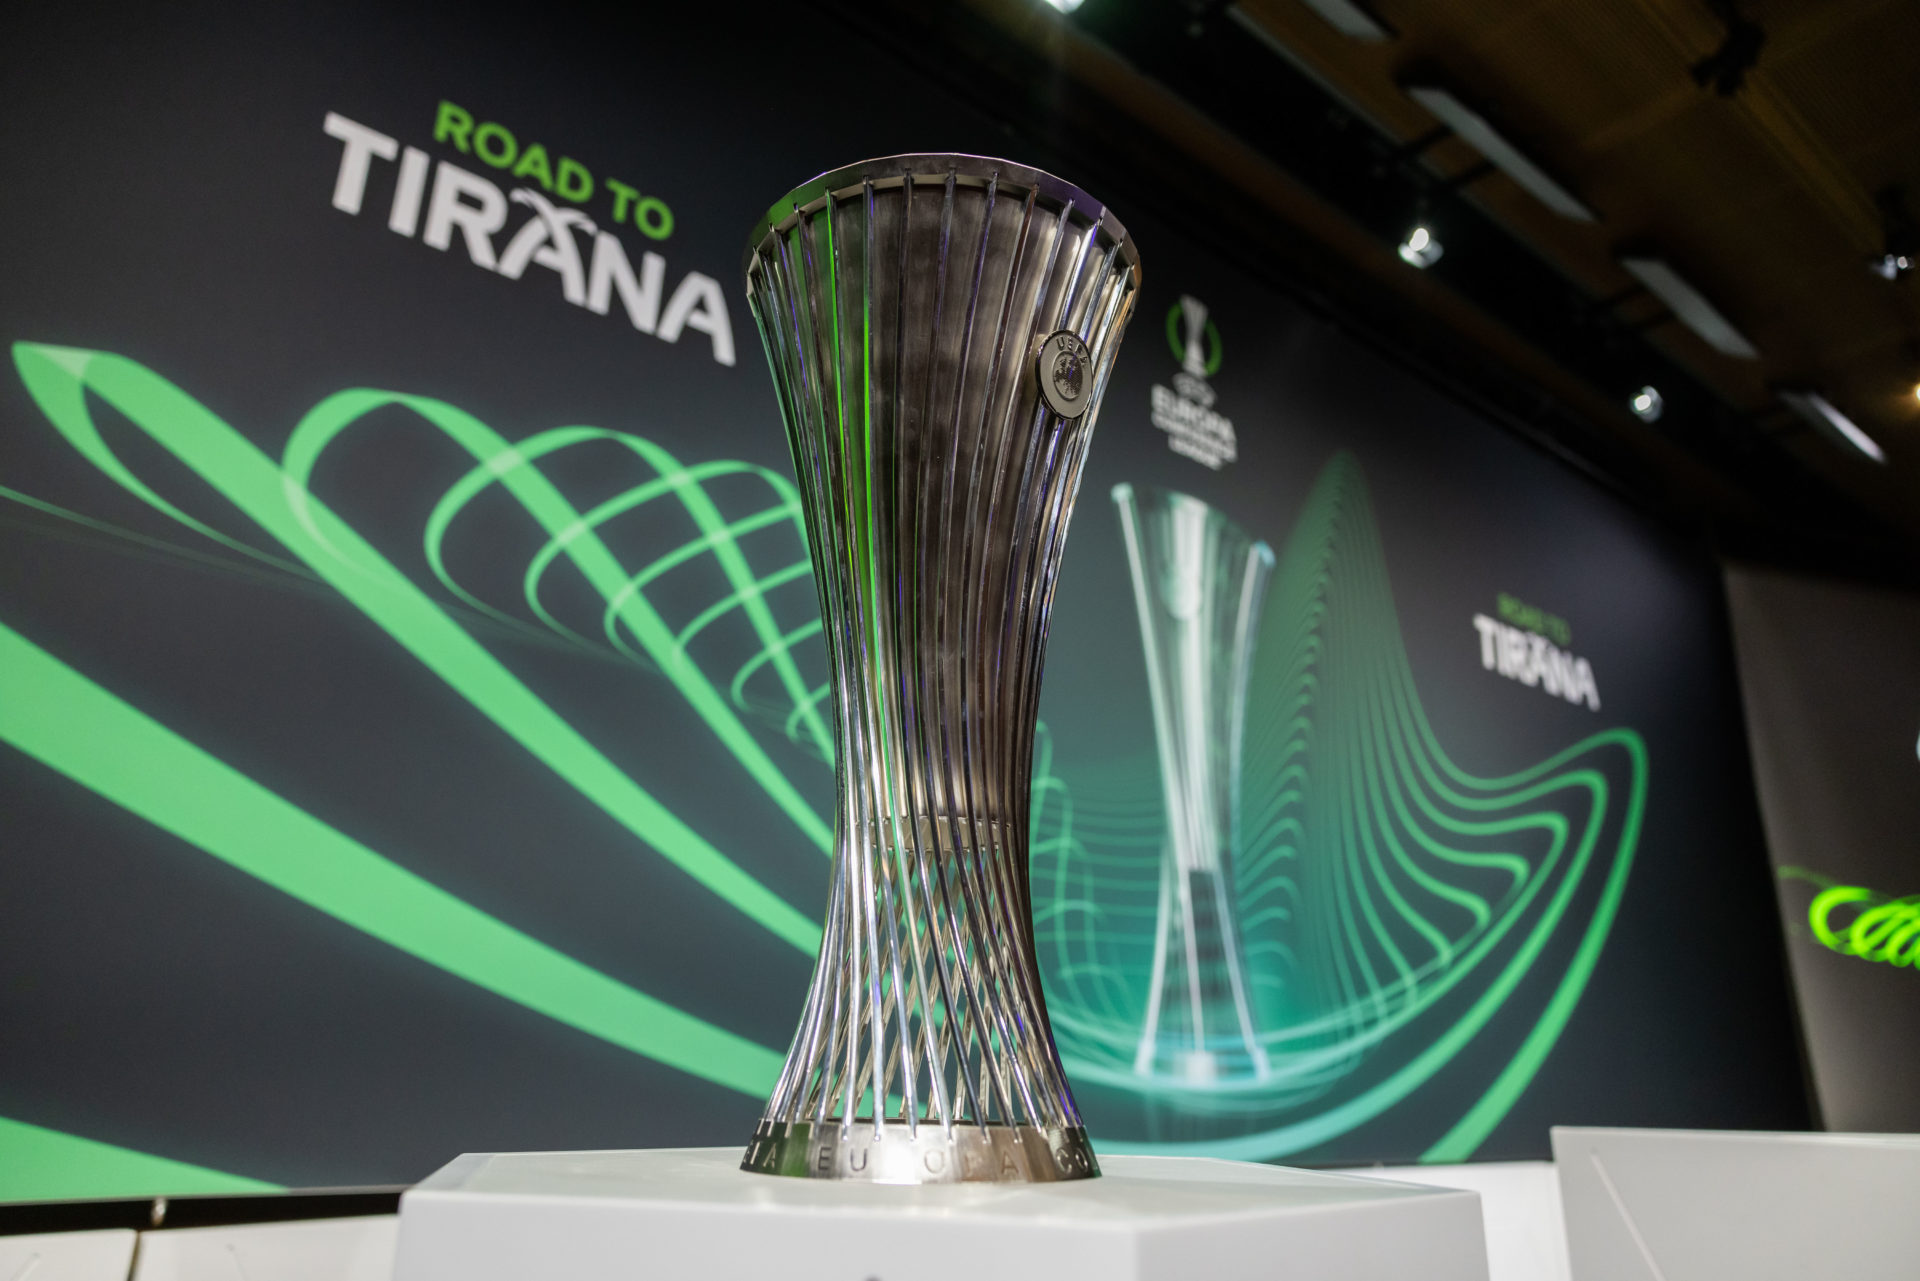 UEFA Europa Conference League 2021/22 Quarter-finals and Semi-finals Draw